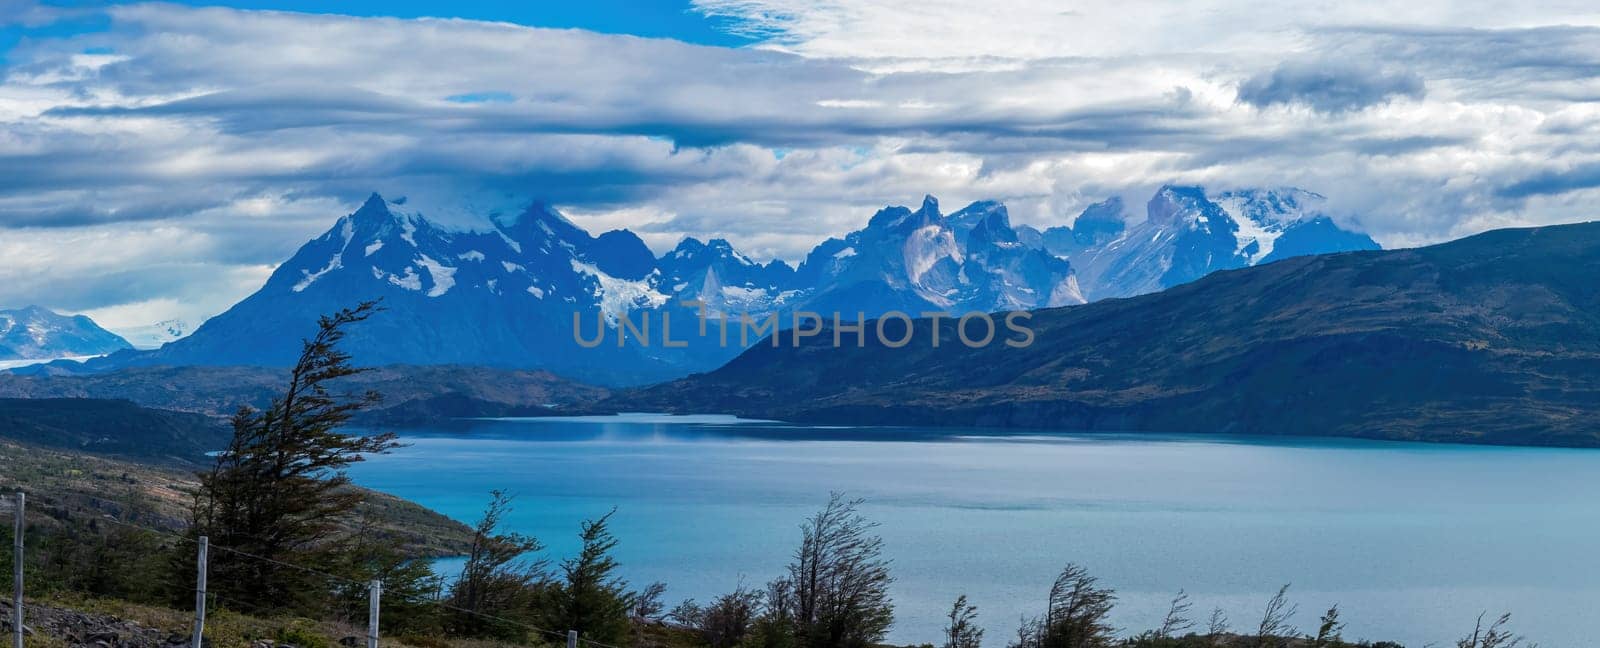 Majestic Mountain Range Overlooking a Serene Blue Lake by FerradalFCG